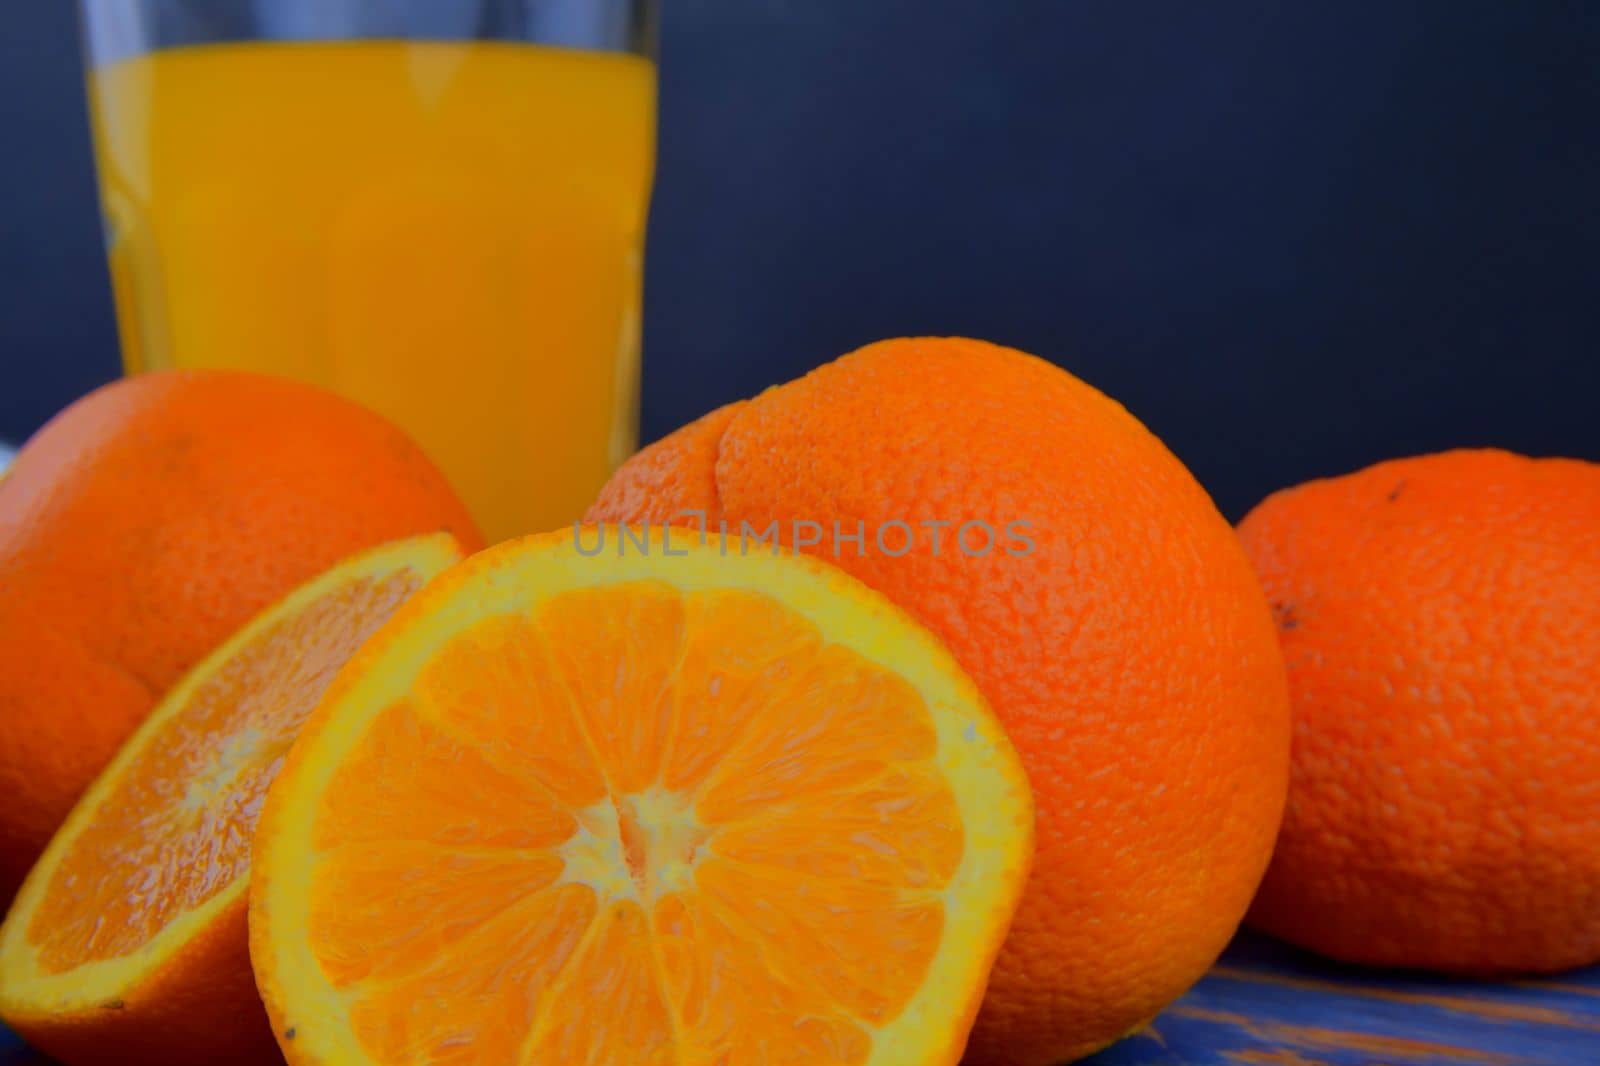 Tangerines, oranges, a glass of orange juice and manual citrus squezeer on blue wooden background. Oranges cut in half. Close-up. 